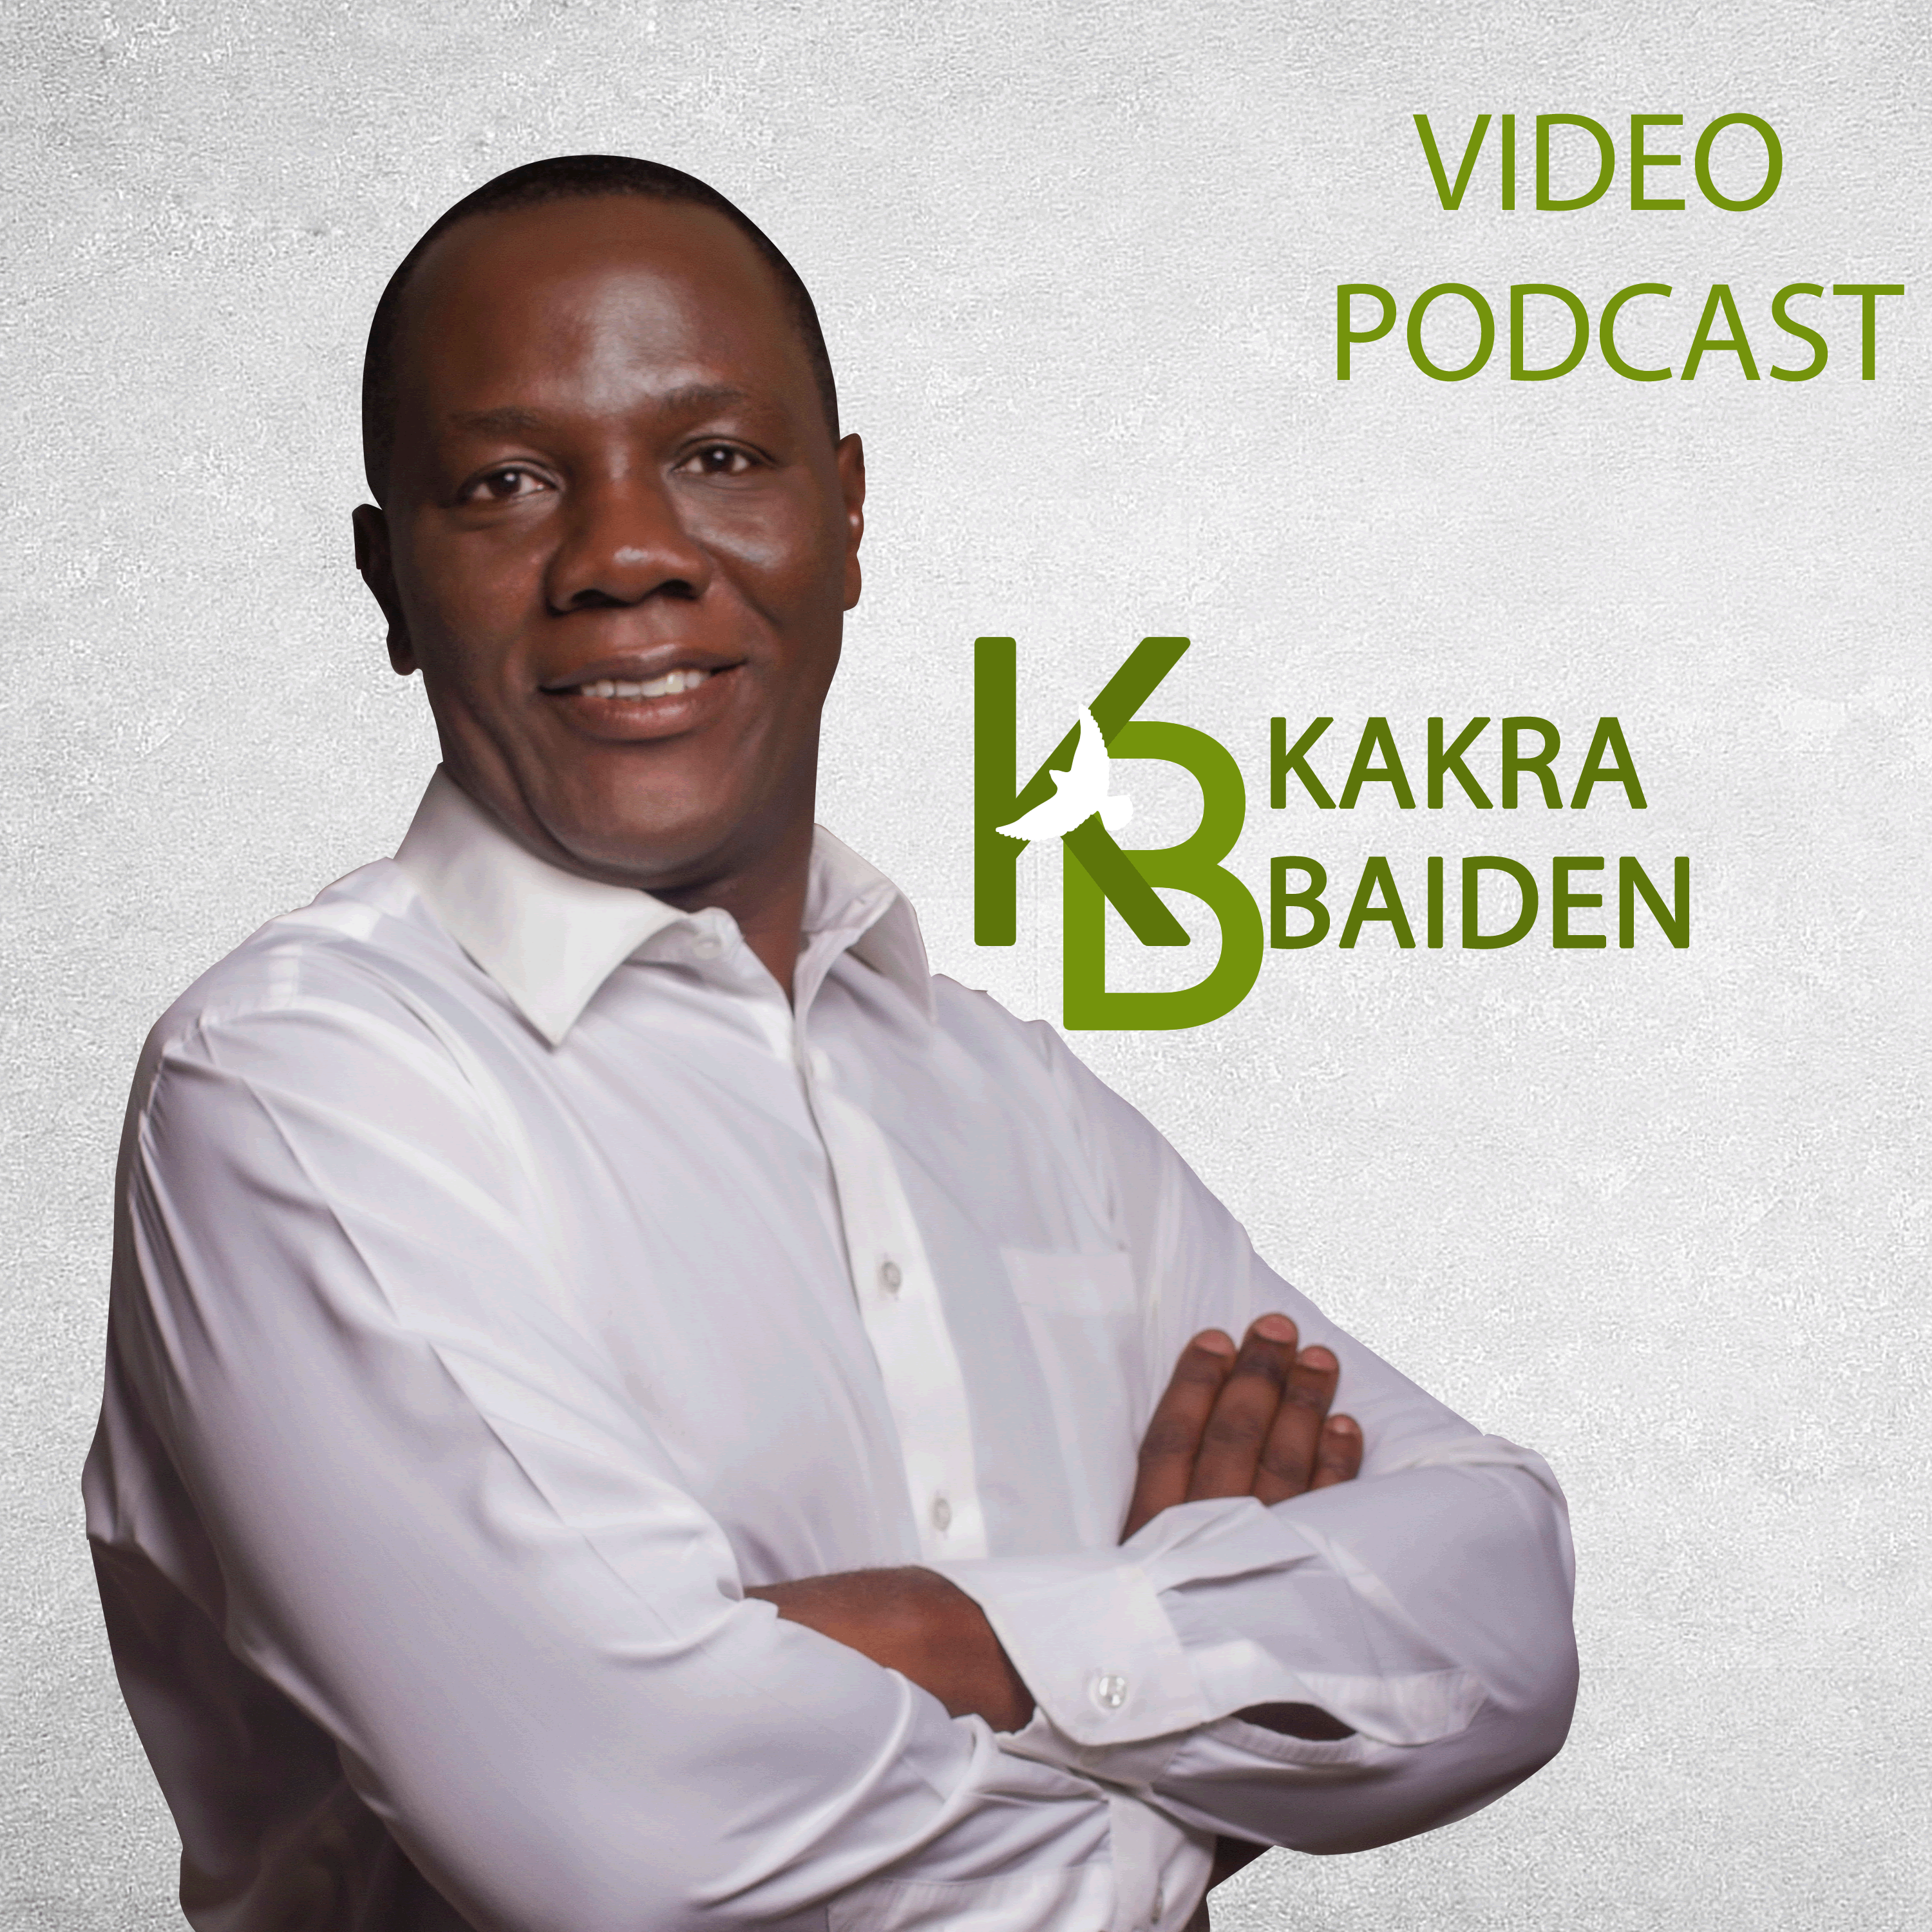 Kakra Baiden Video Podcast podcast